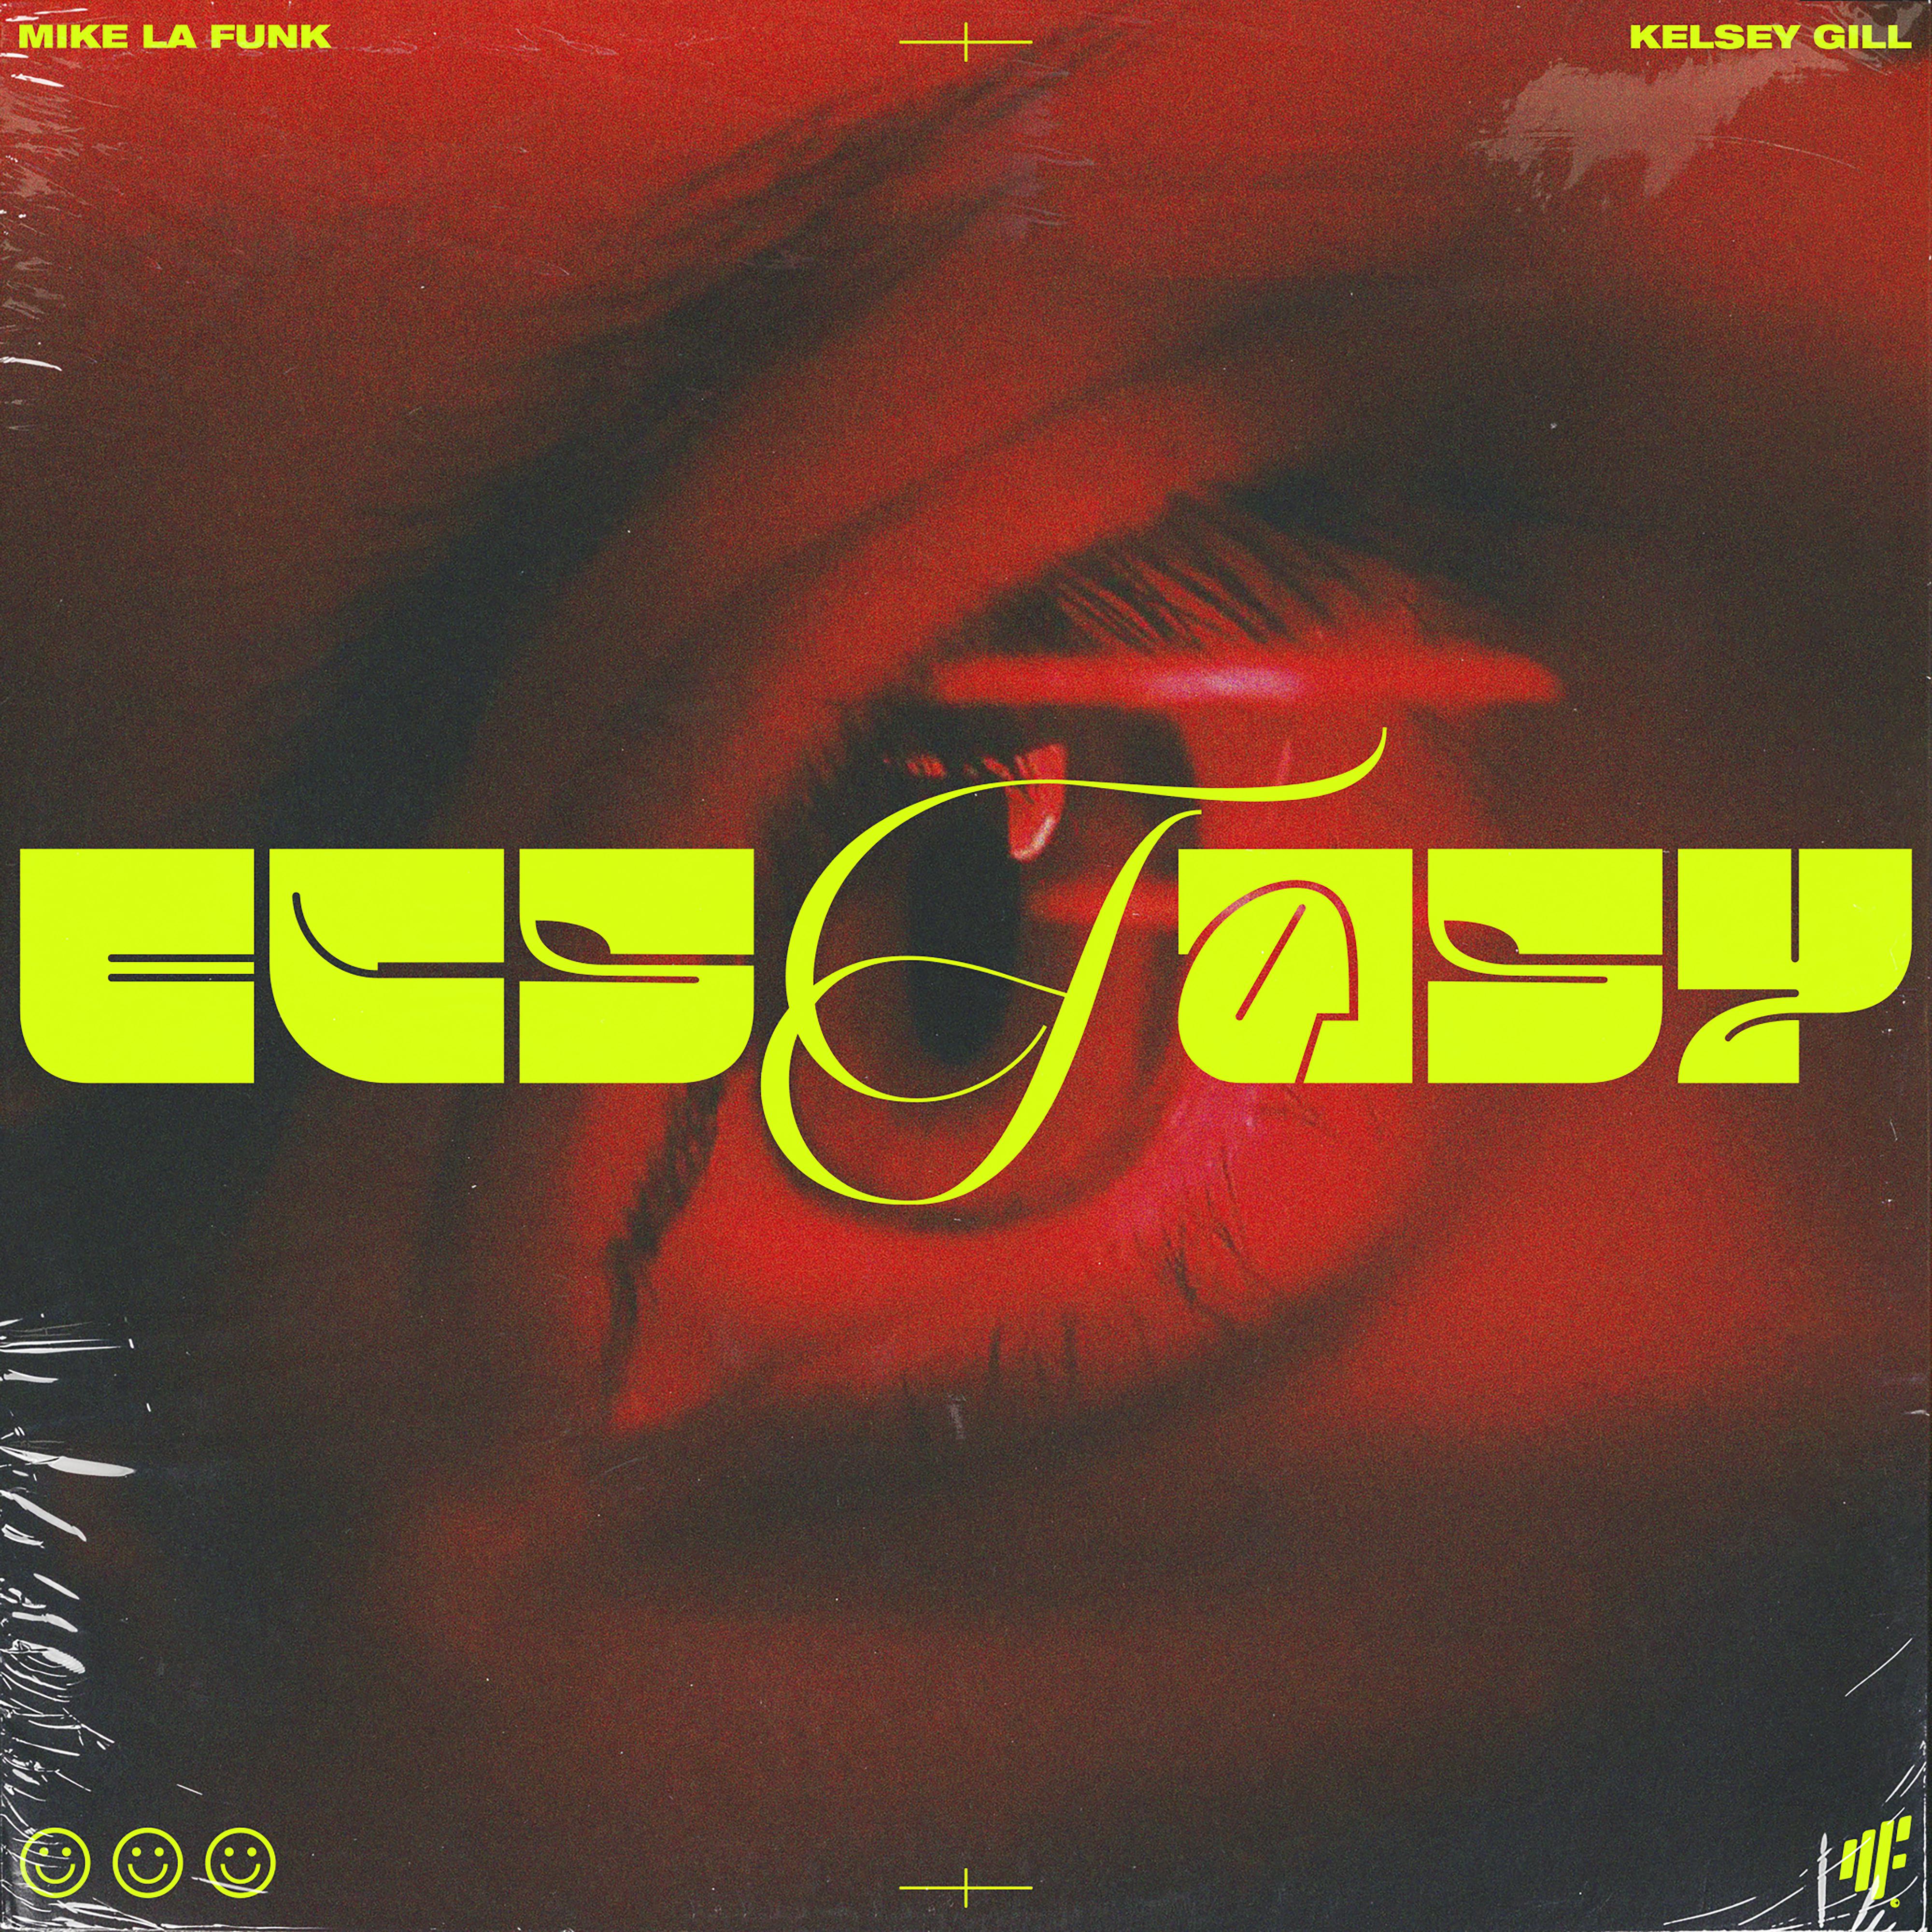 Mike La Funk - Ecstasy